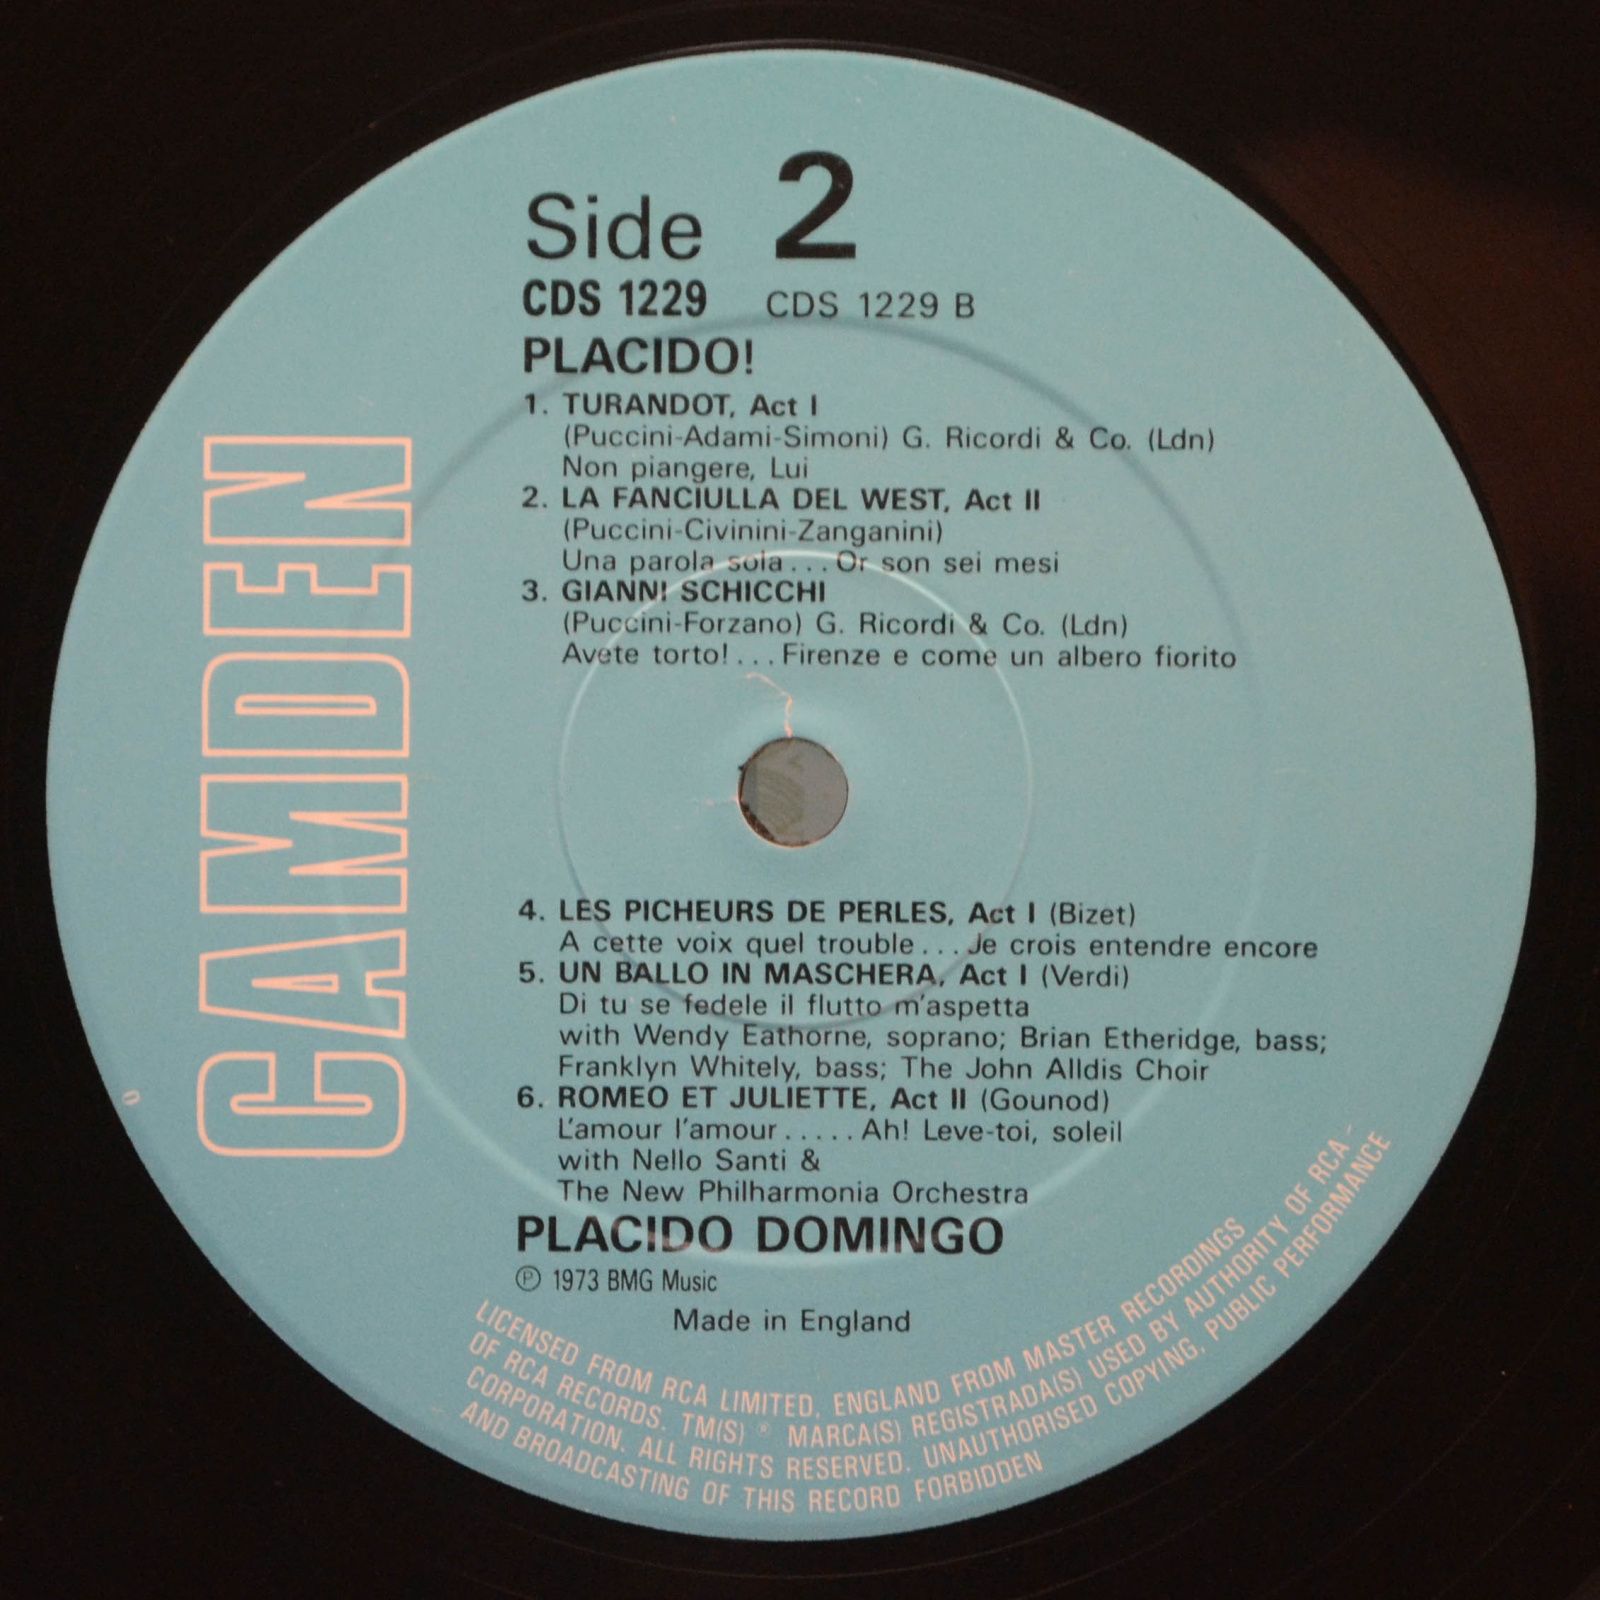 Placido Domingo — Placido!, 1988